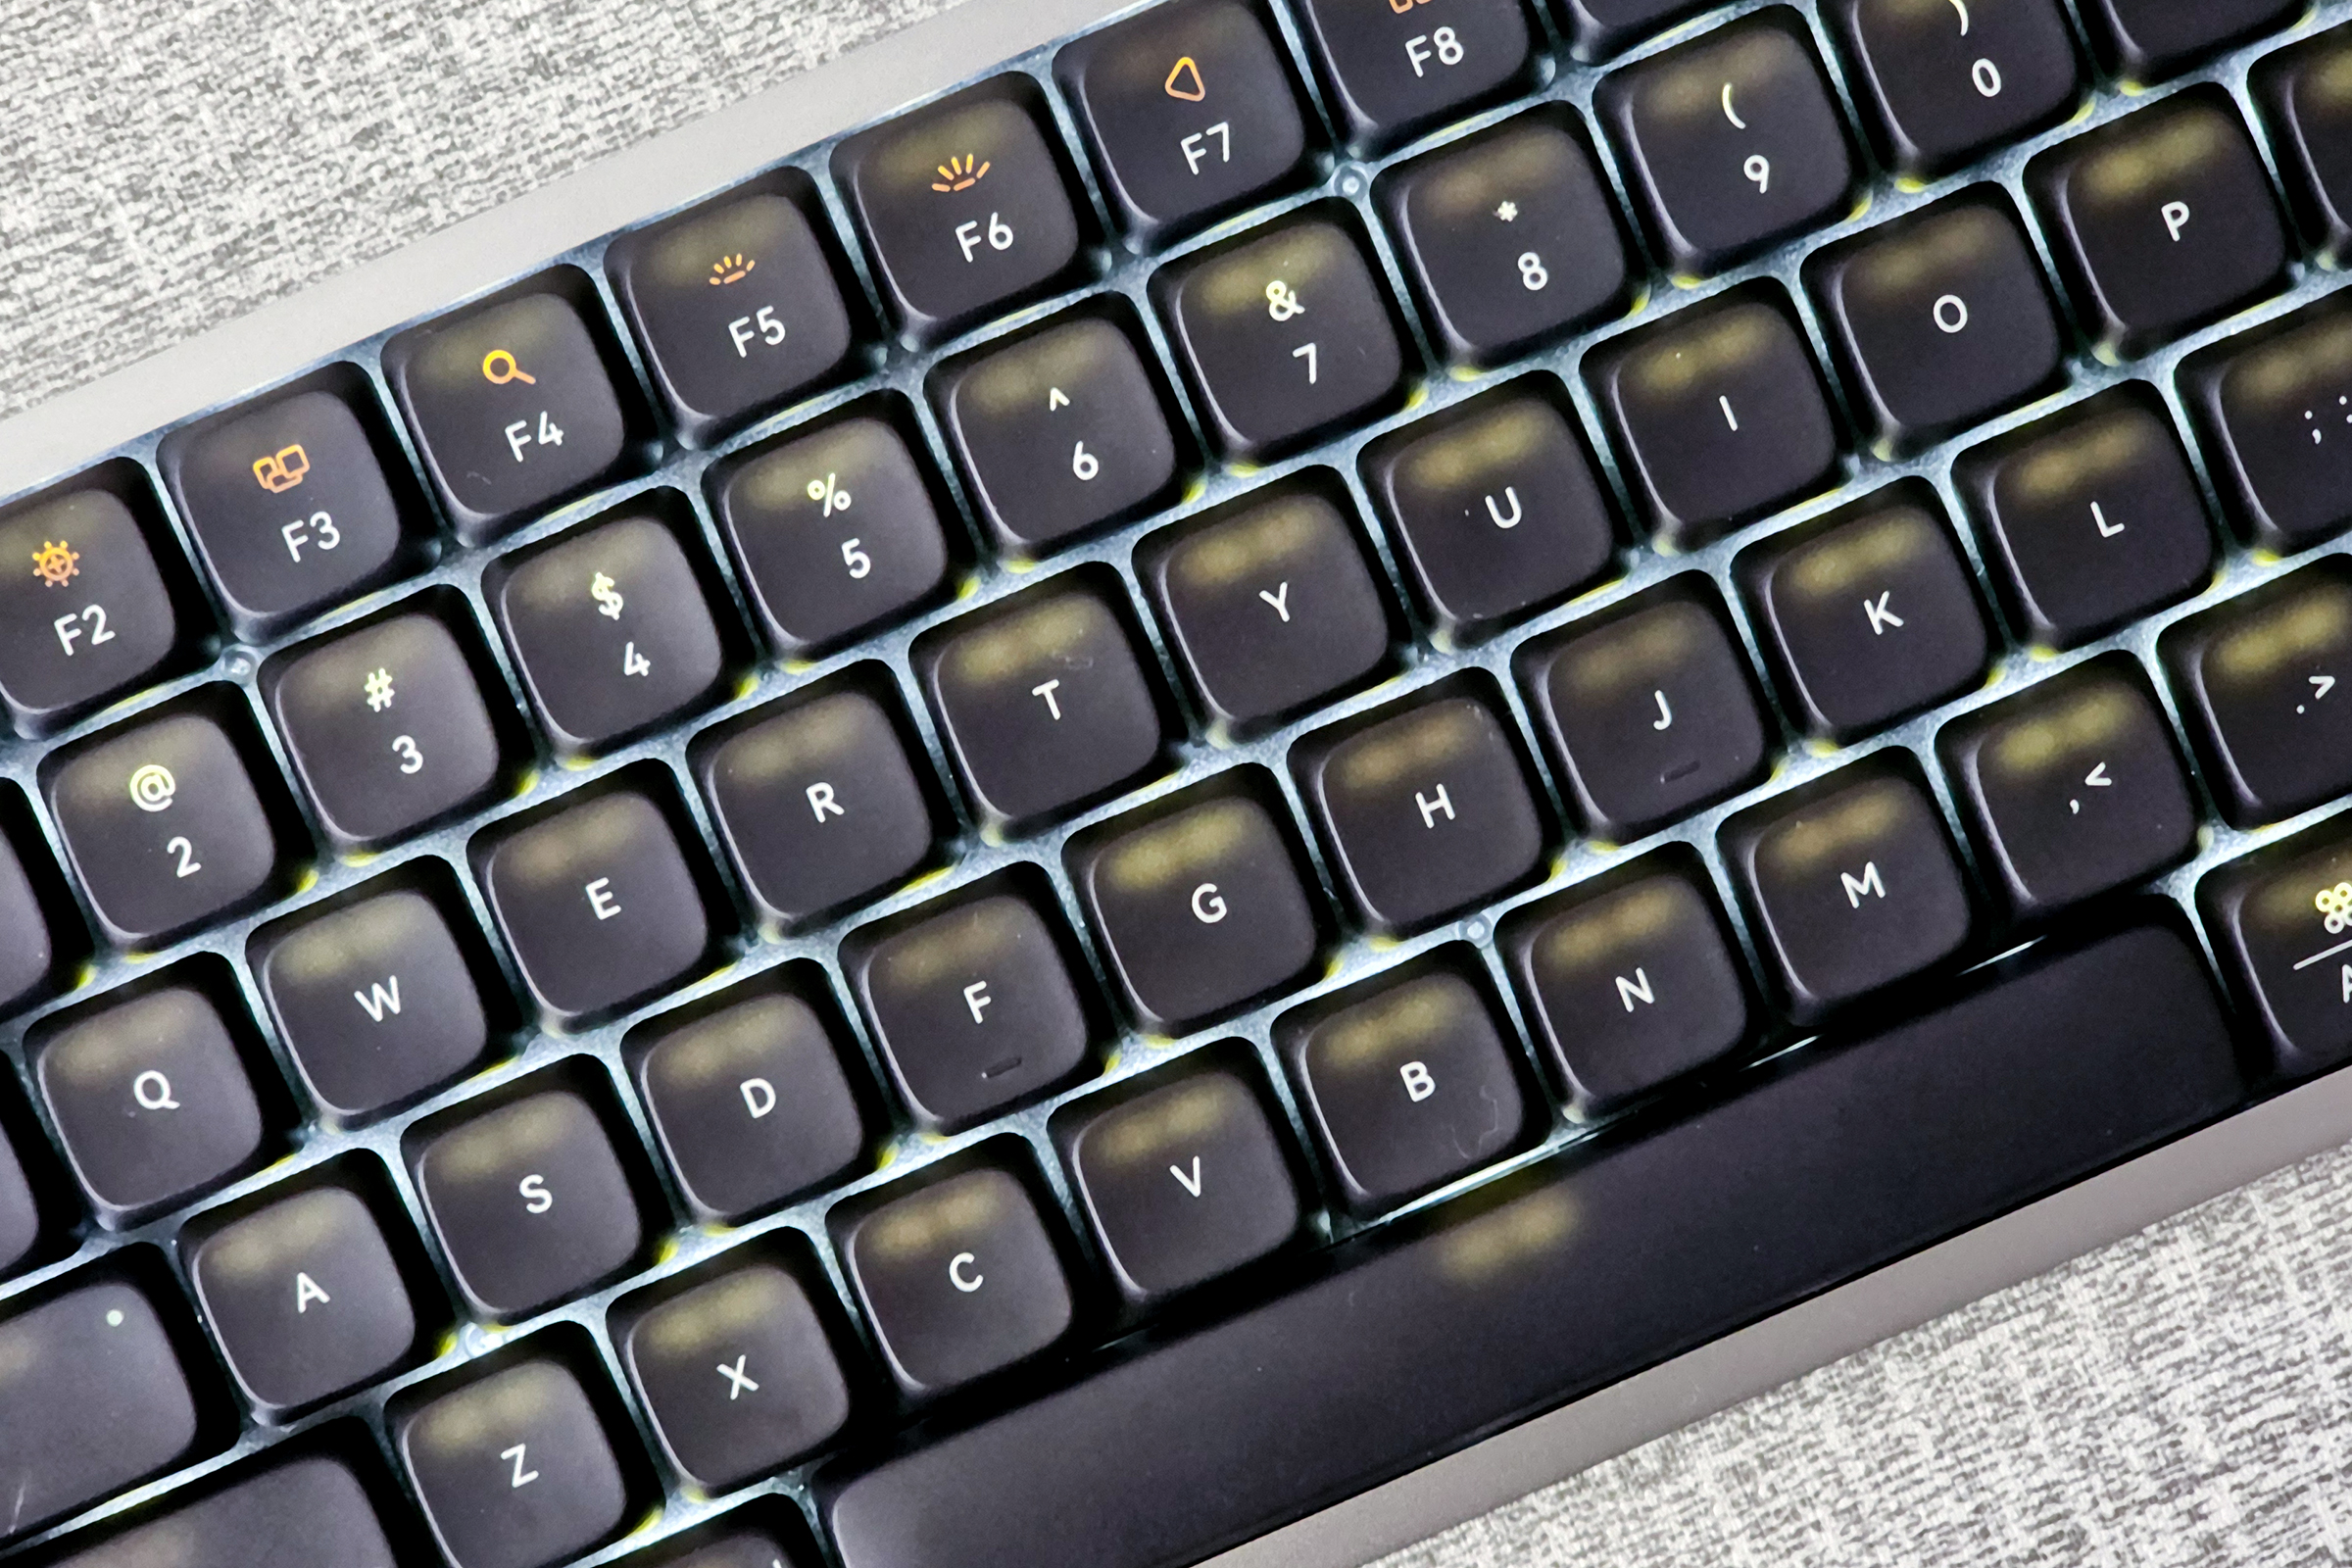 Backlight bleeding through black dye-sub PBT keycaps on Lofree Flow low-profile mechanical keyboard.